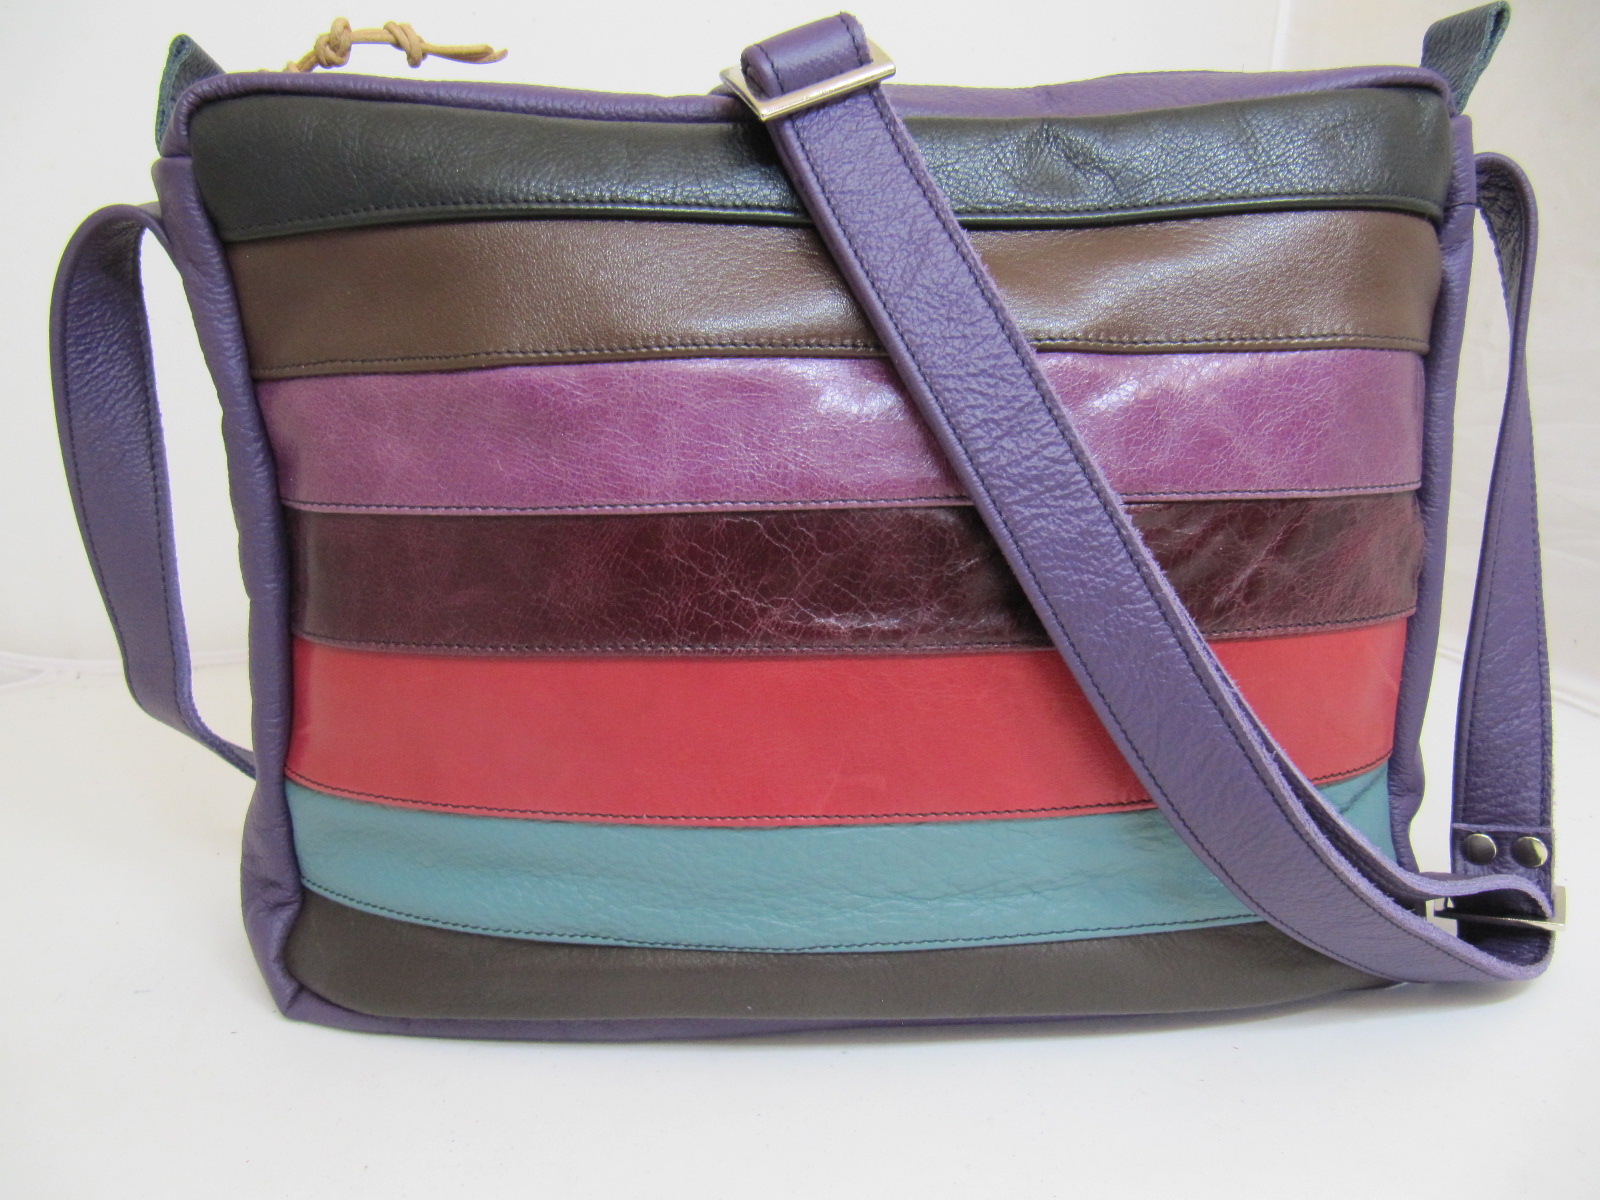 Leather stripe handbag in purples